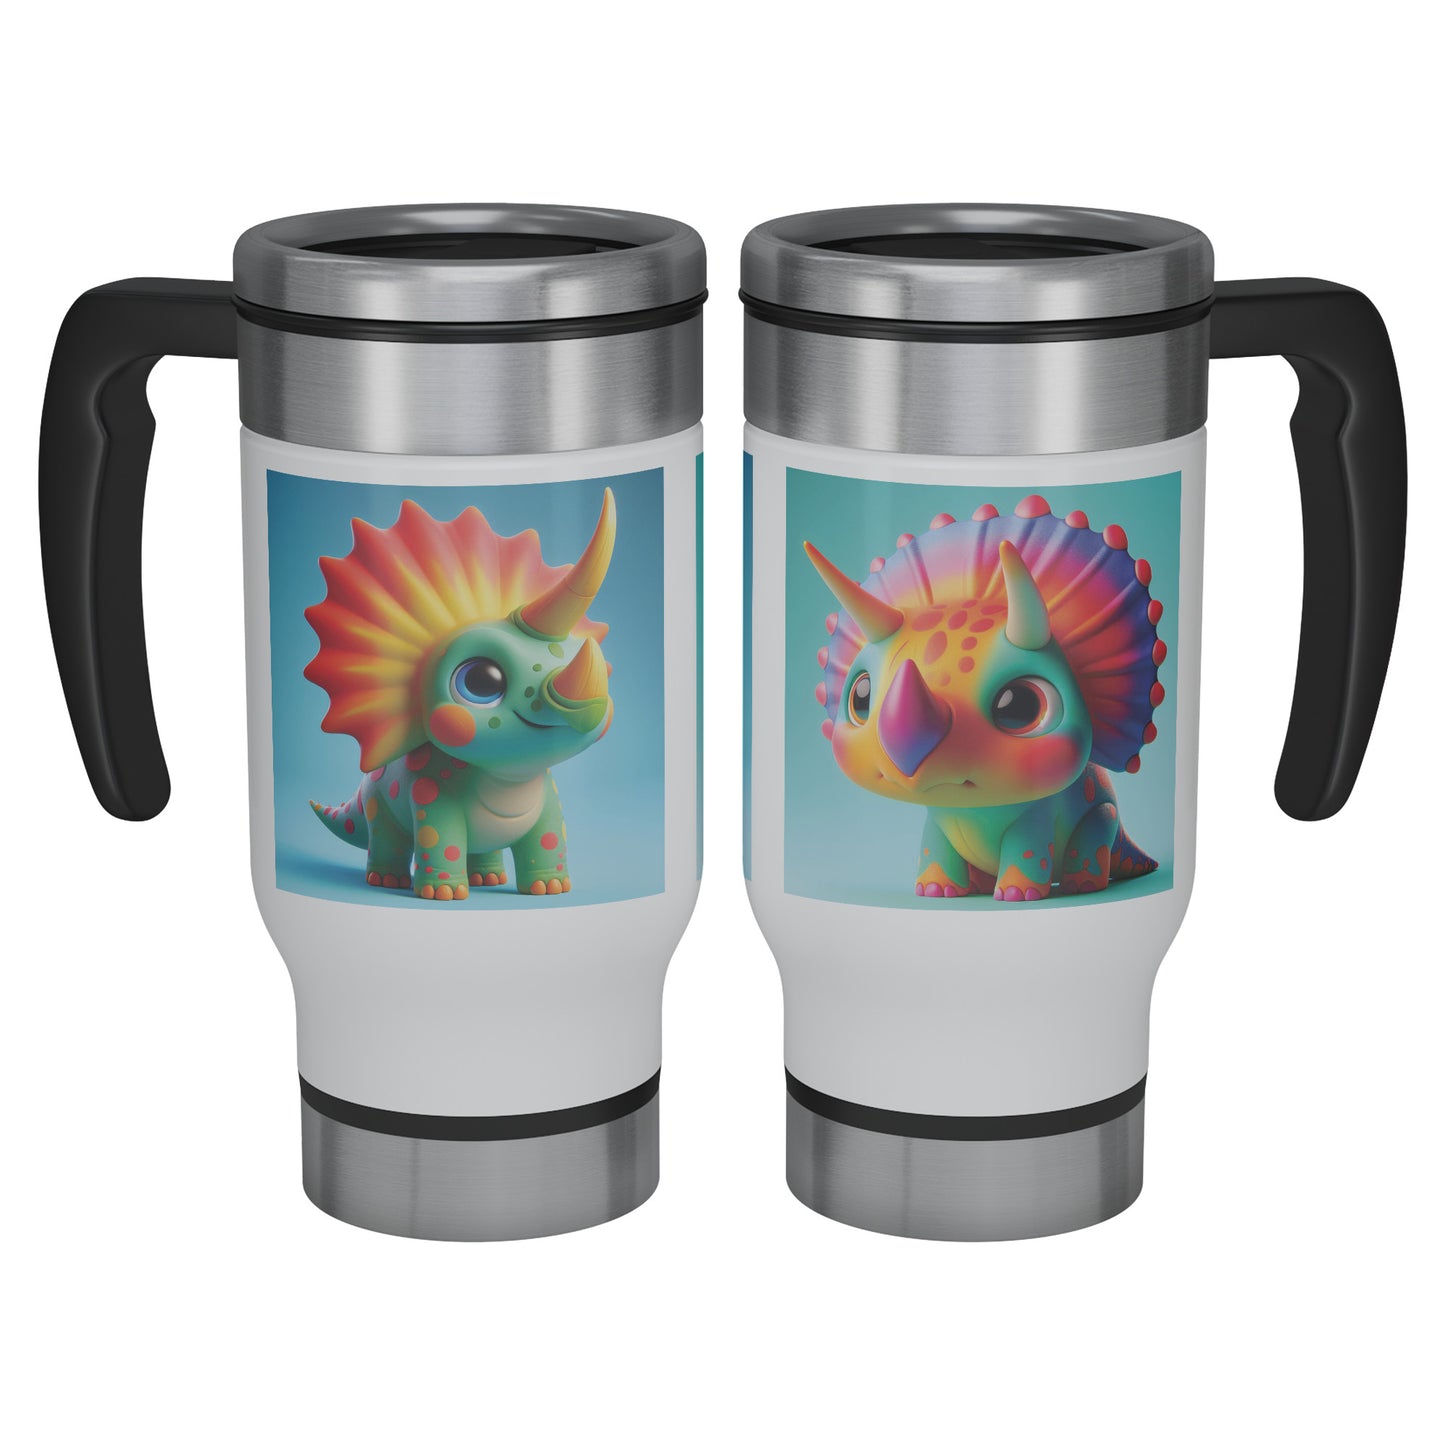 Adorable & Charming Dinosaurs - Travel Mug - Dinosaur #9